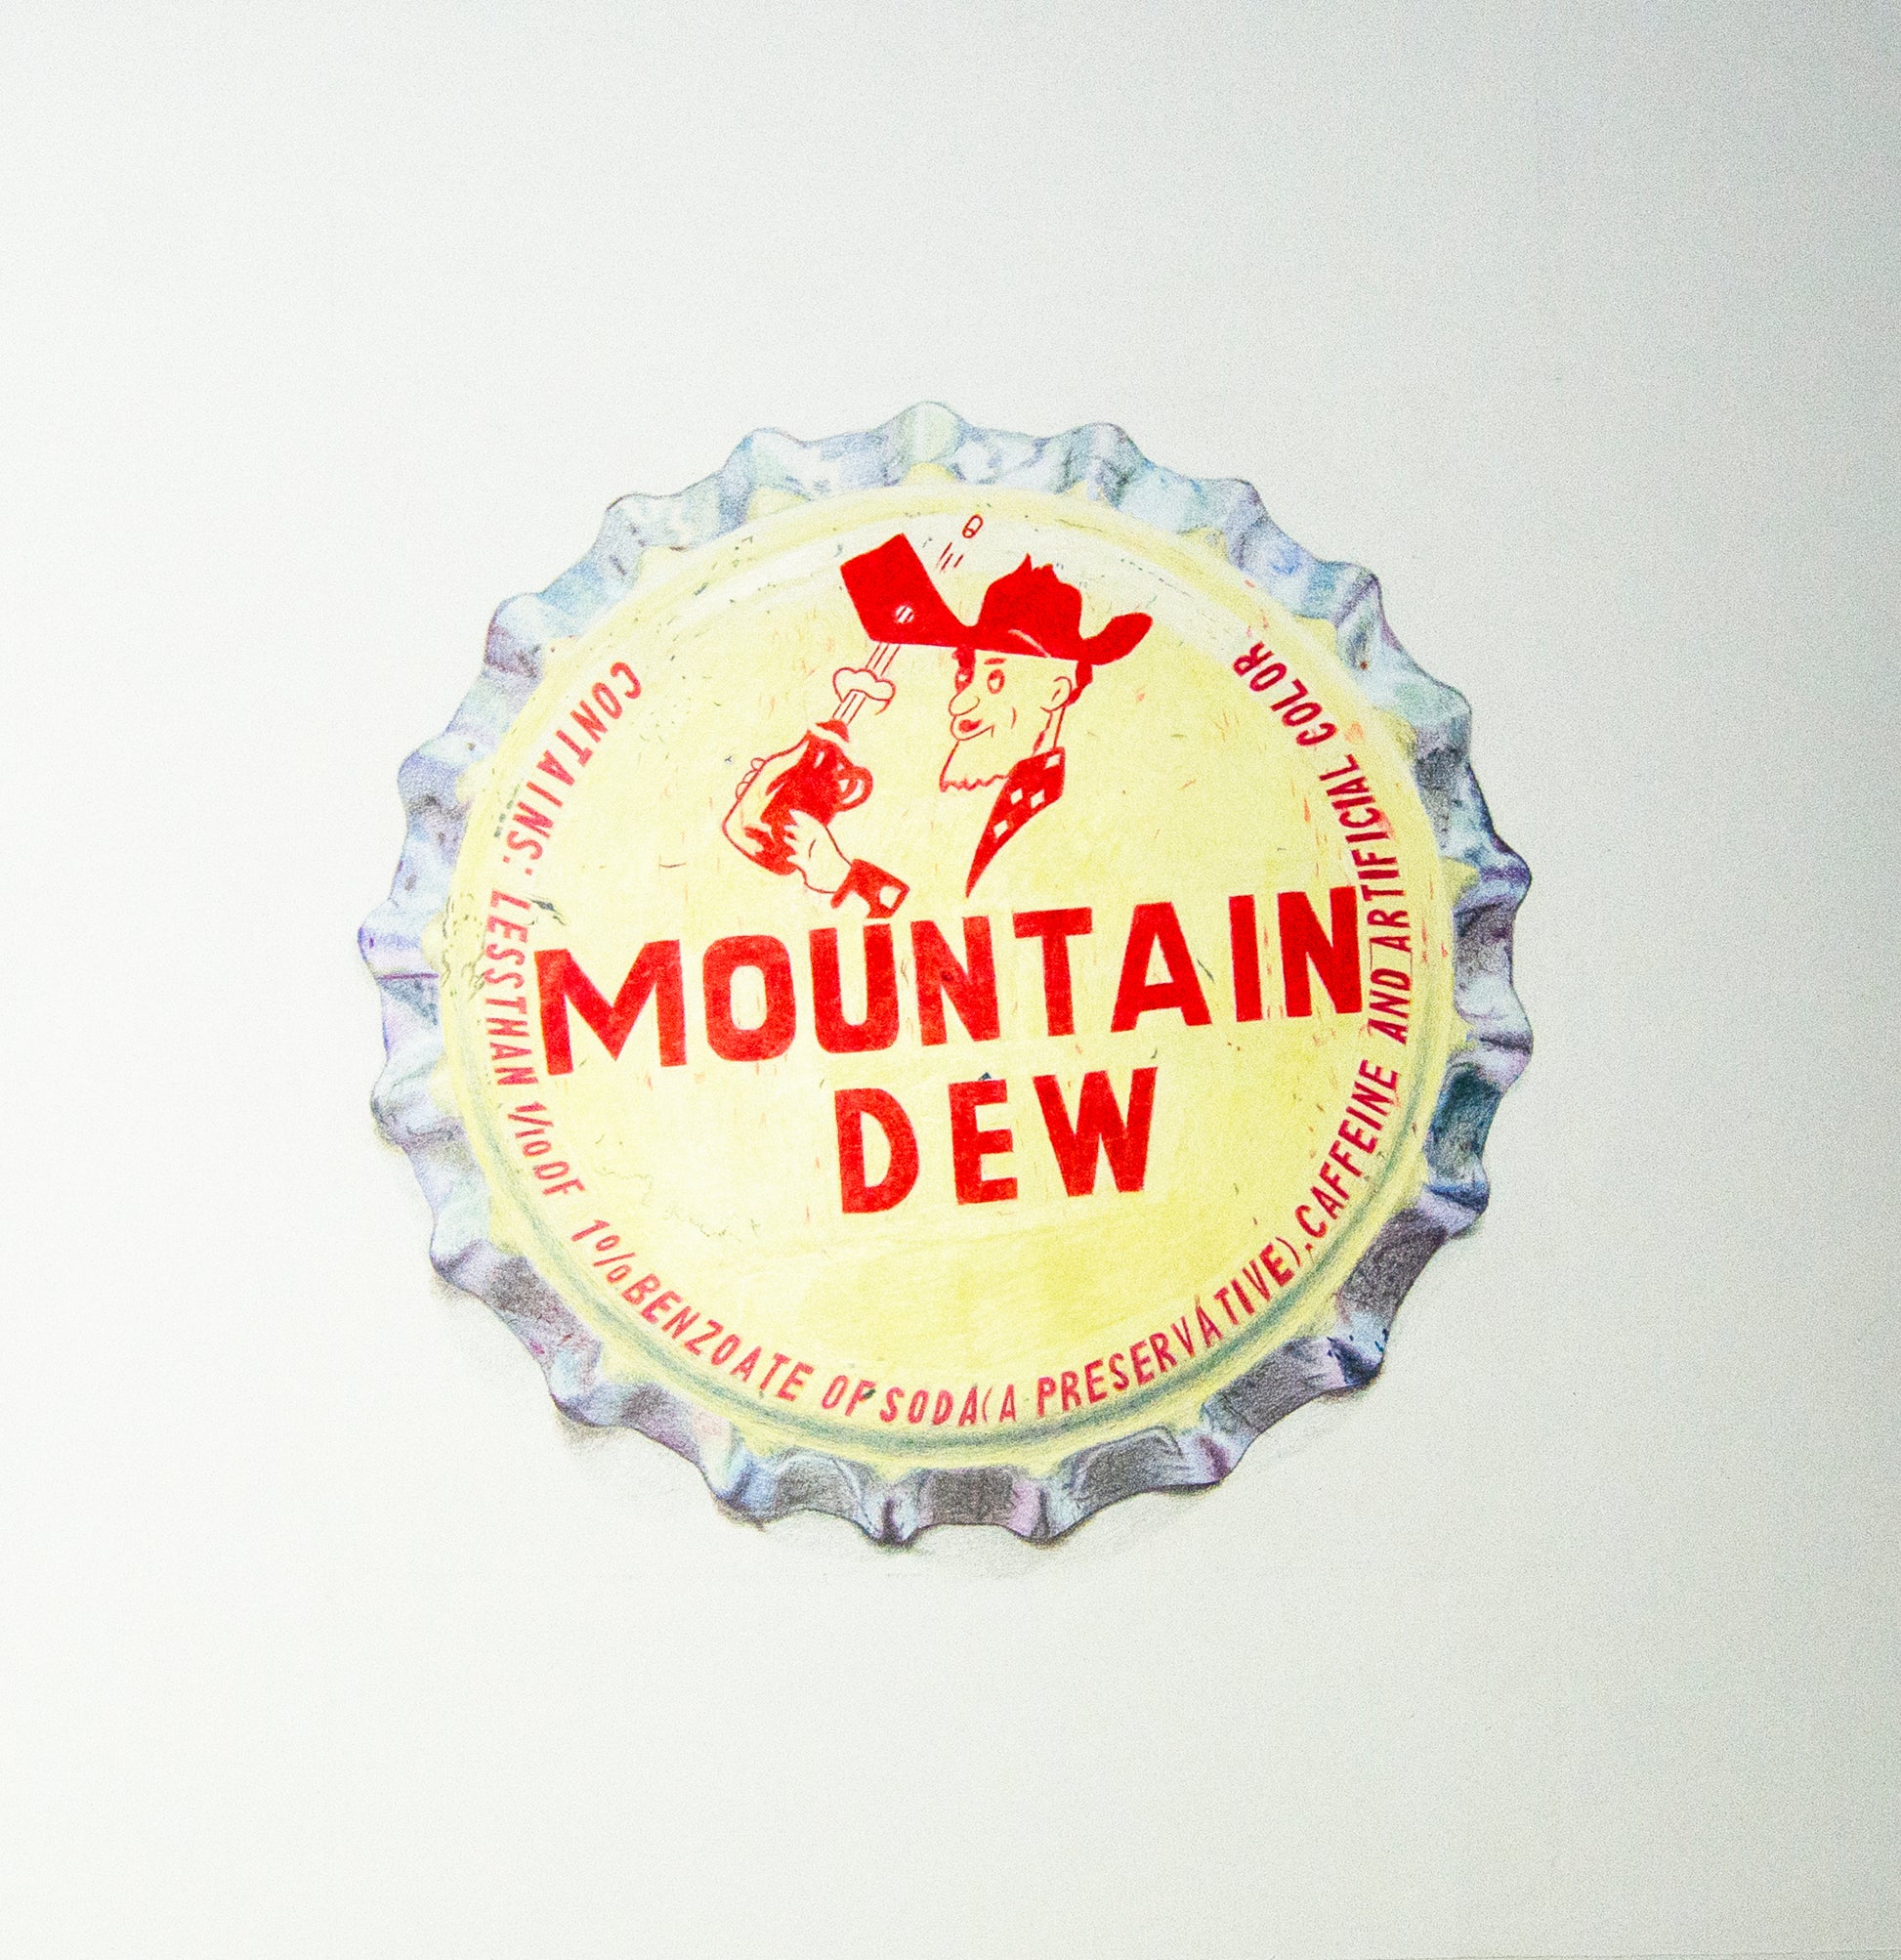 Mountain Dew - Calligraphartstudio